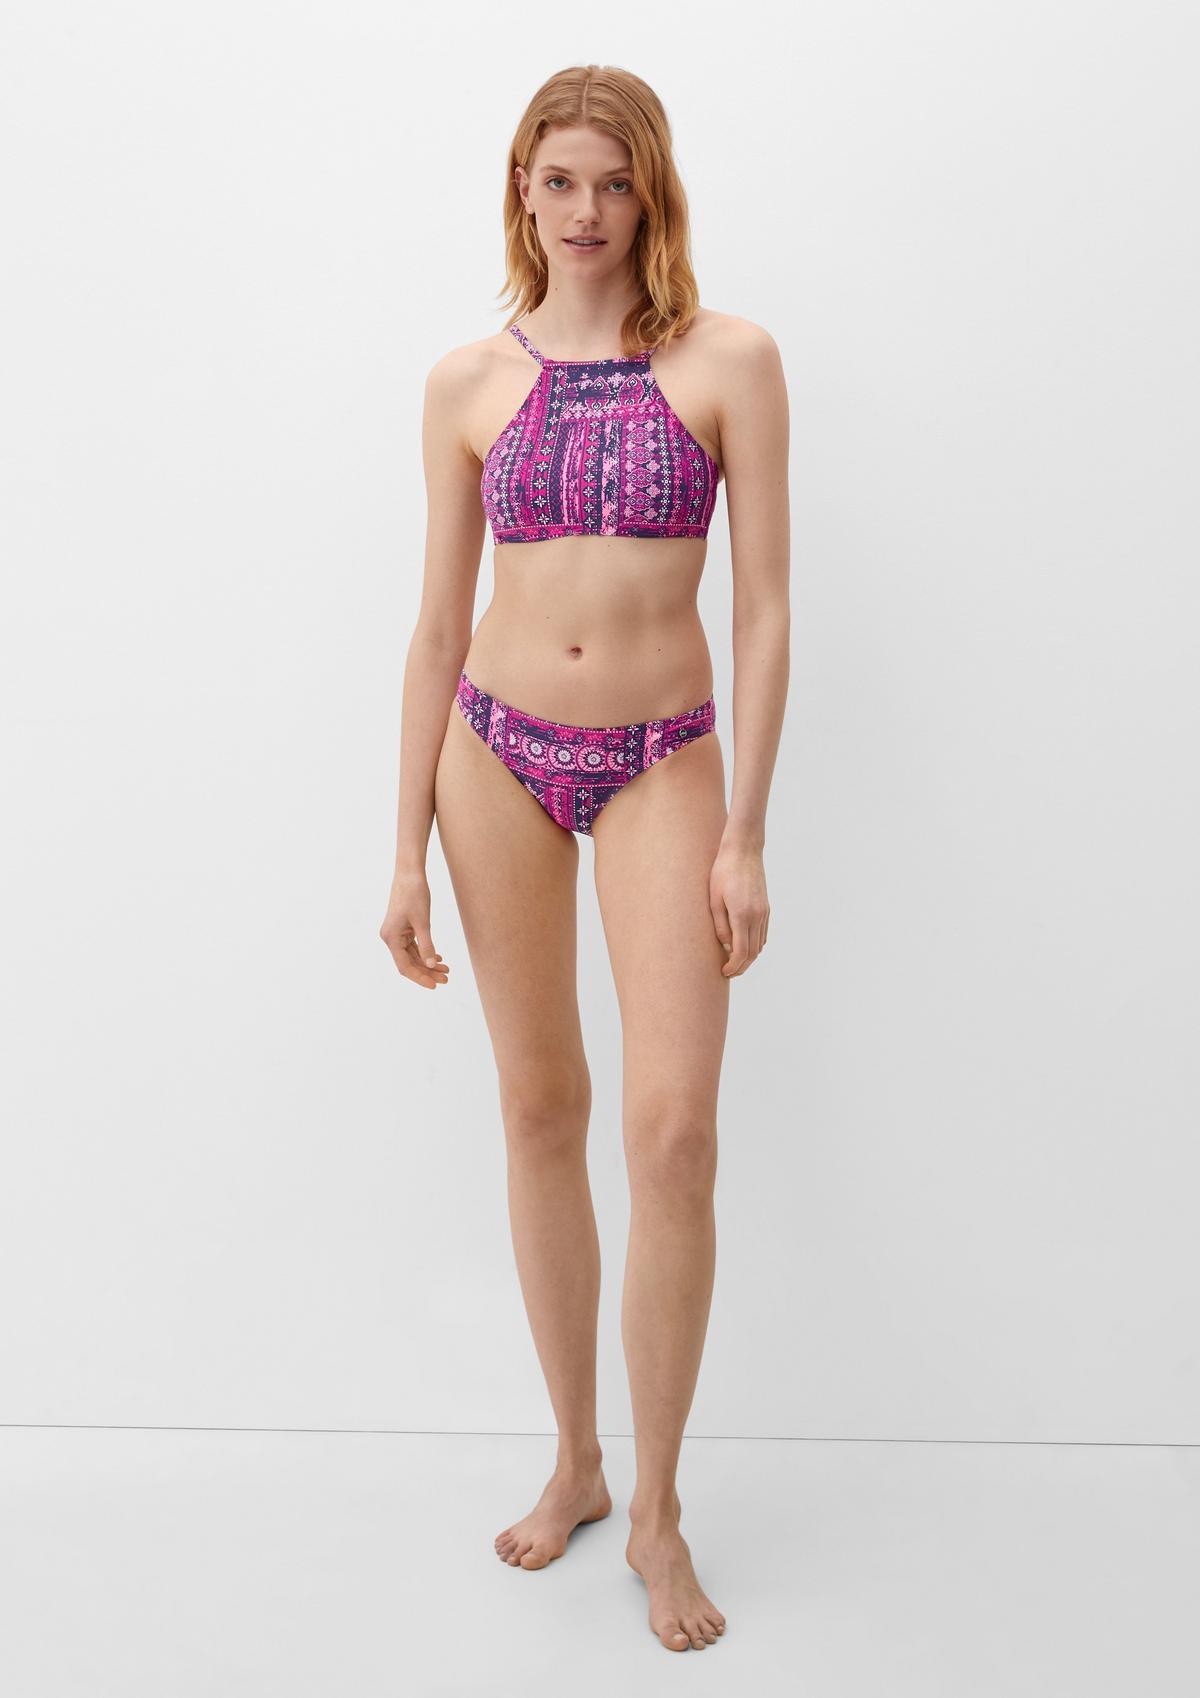 Bustier-Bikini im Set mit All-over-Muster - pink | Bustier-Bikinis